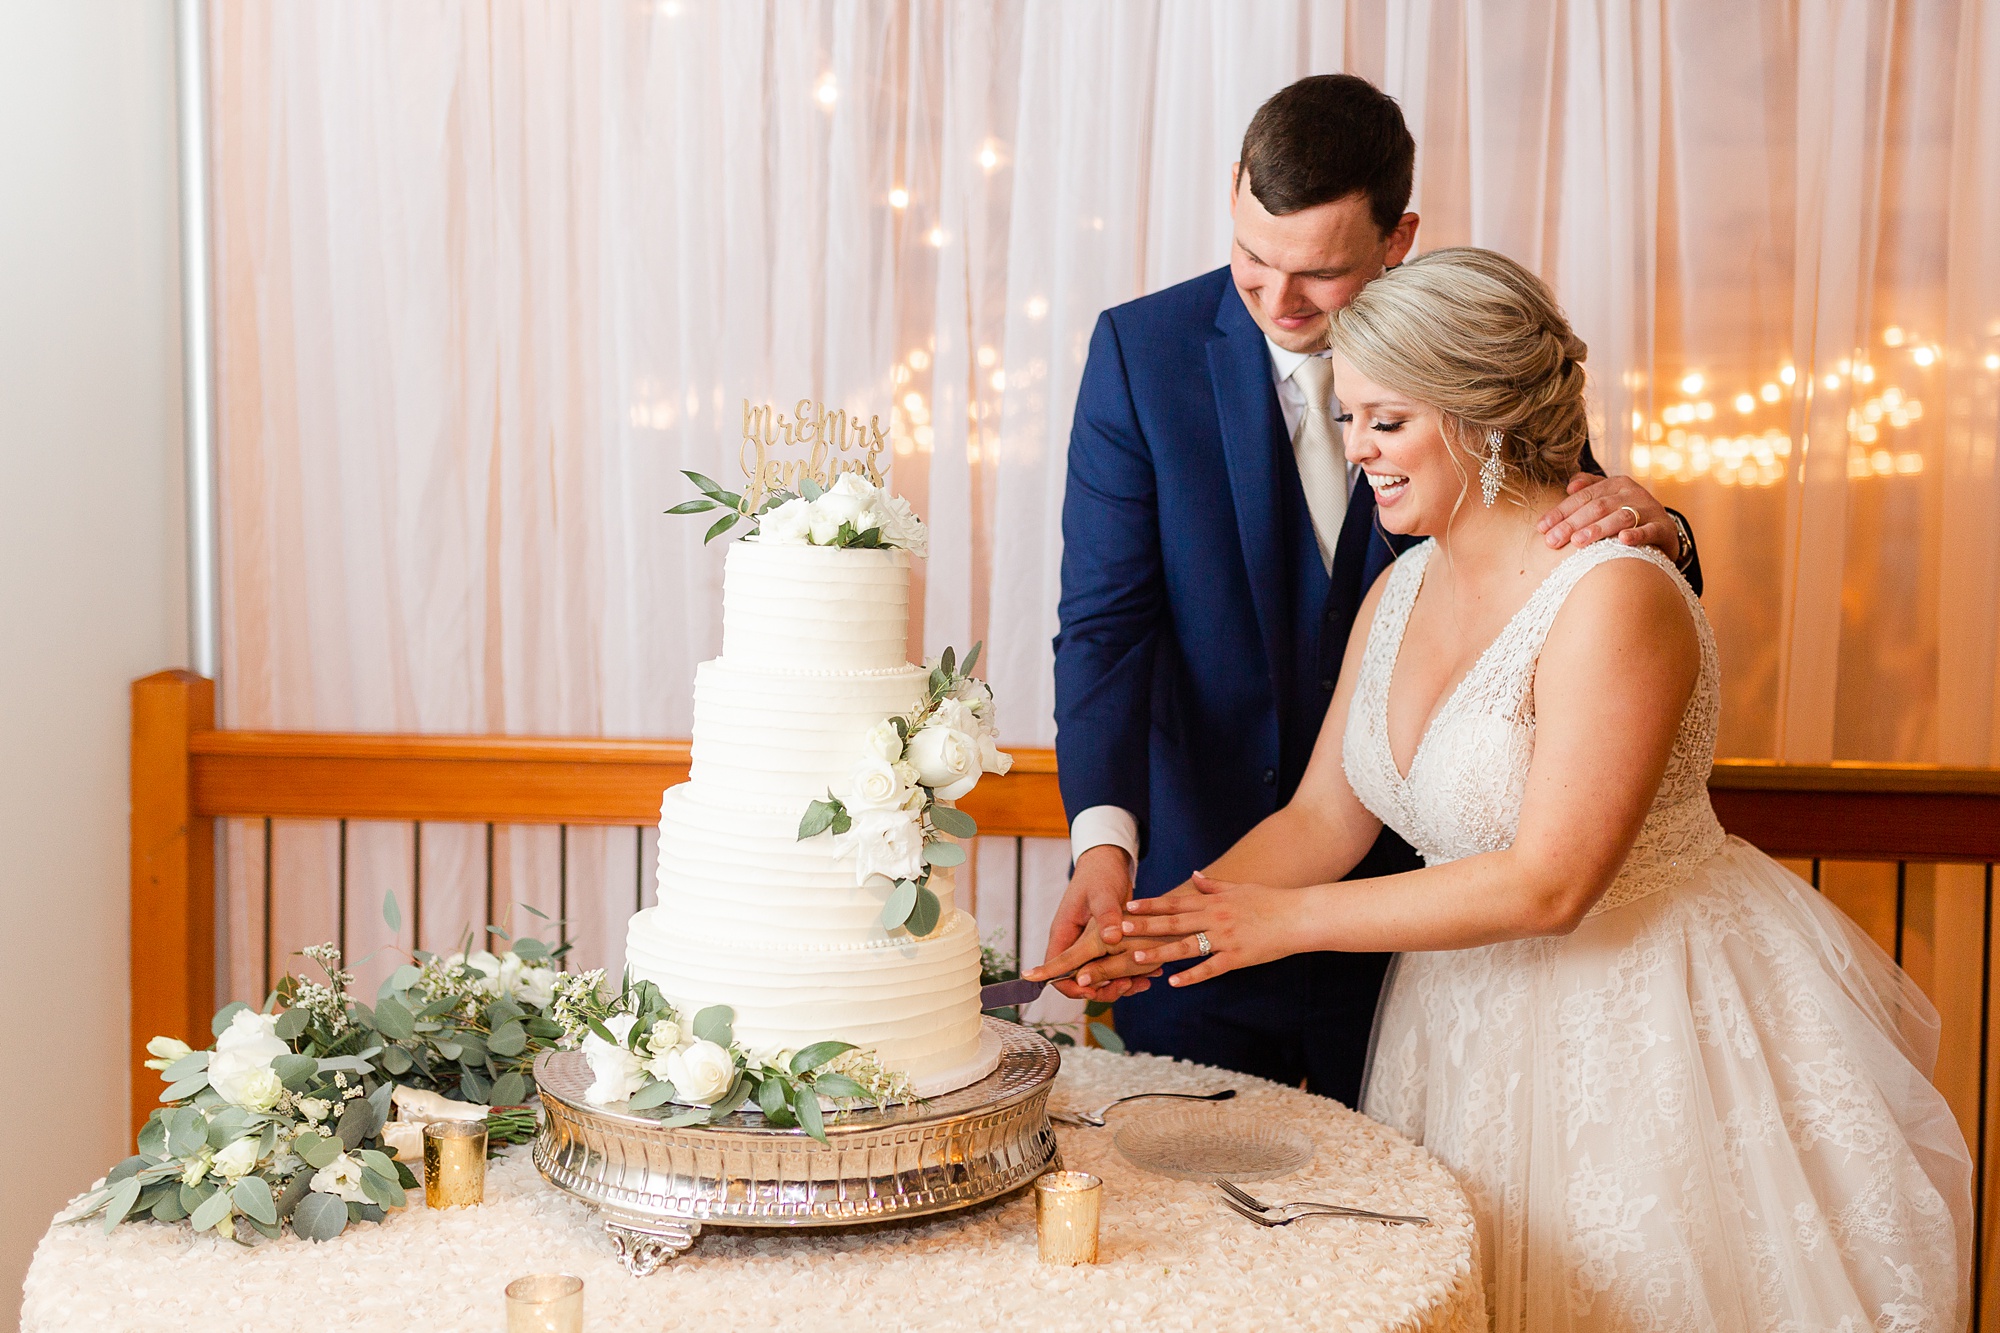 bride and groom cut wedding cake during Raleigh NC wedding reception